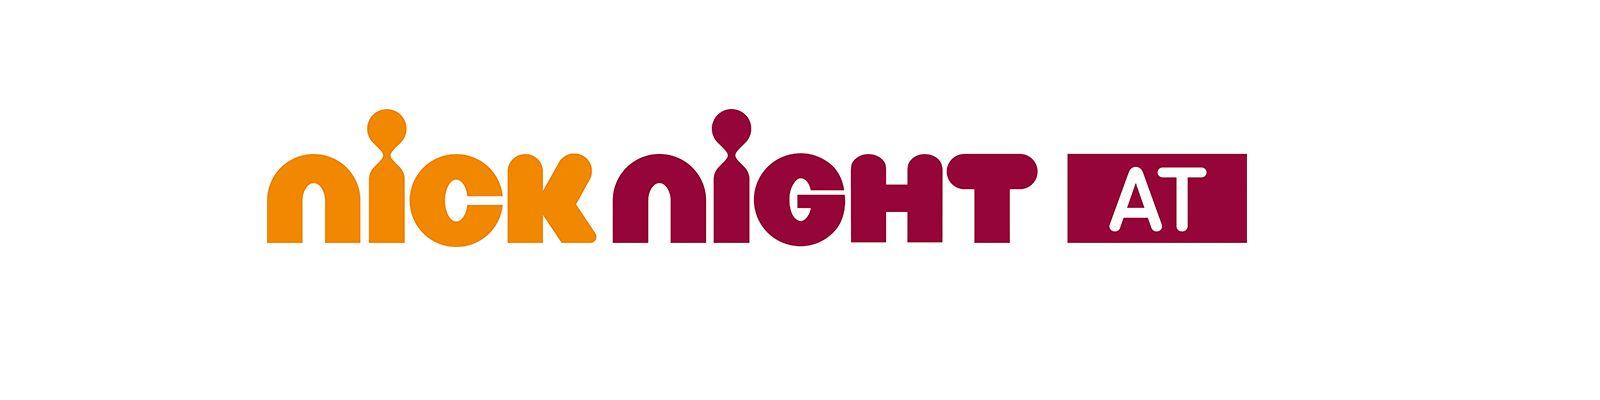 Nick Night Logo - Nicknight Austria - TV Stationen – Firmenverzeichnis – medianet.at